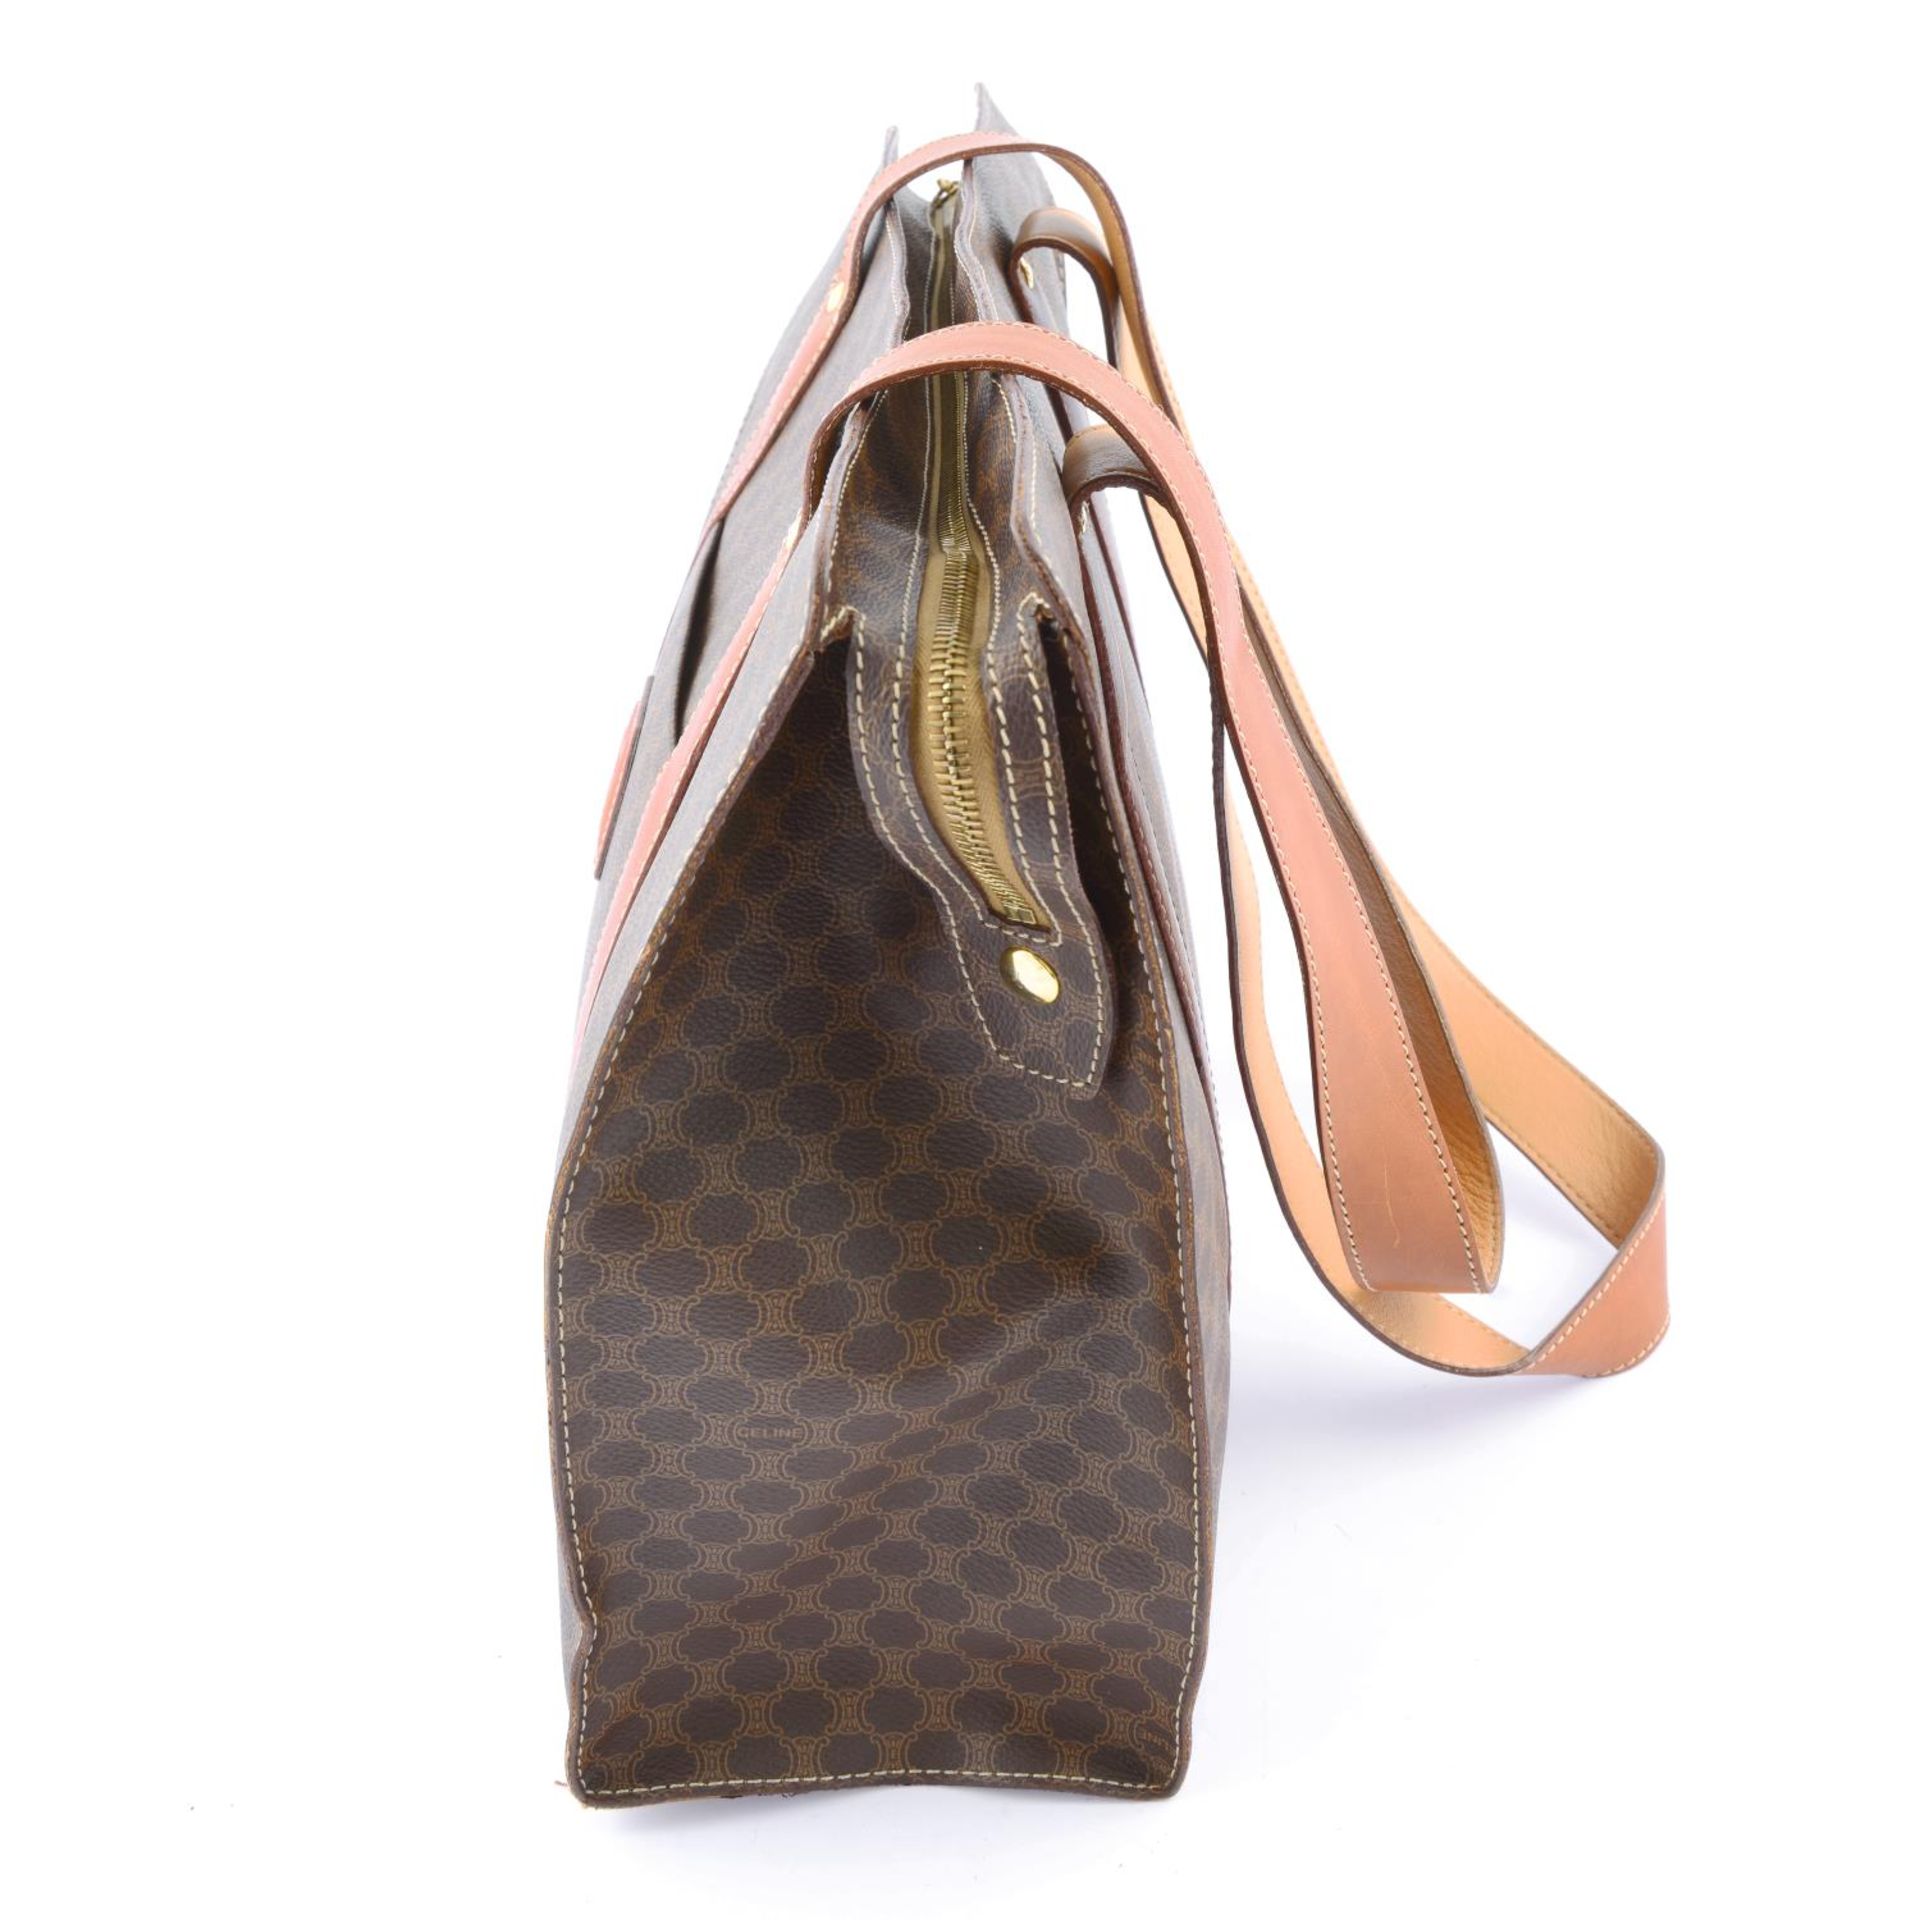 CÉLINE - a Macadam coated canvas handbag. - Image 2 of 7